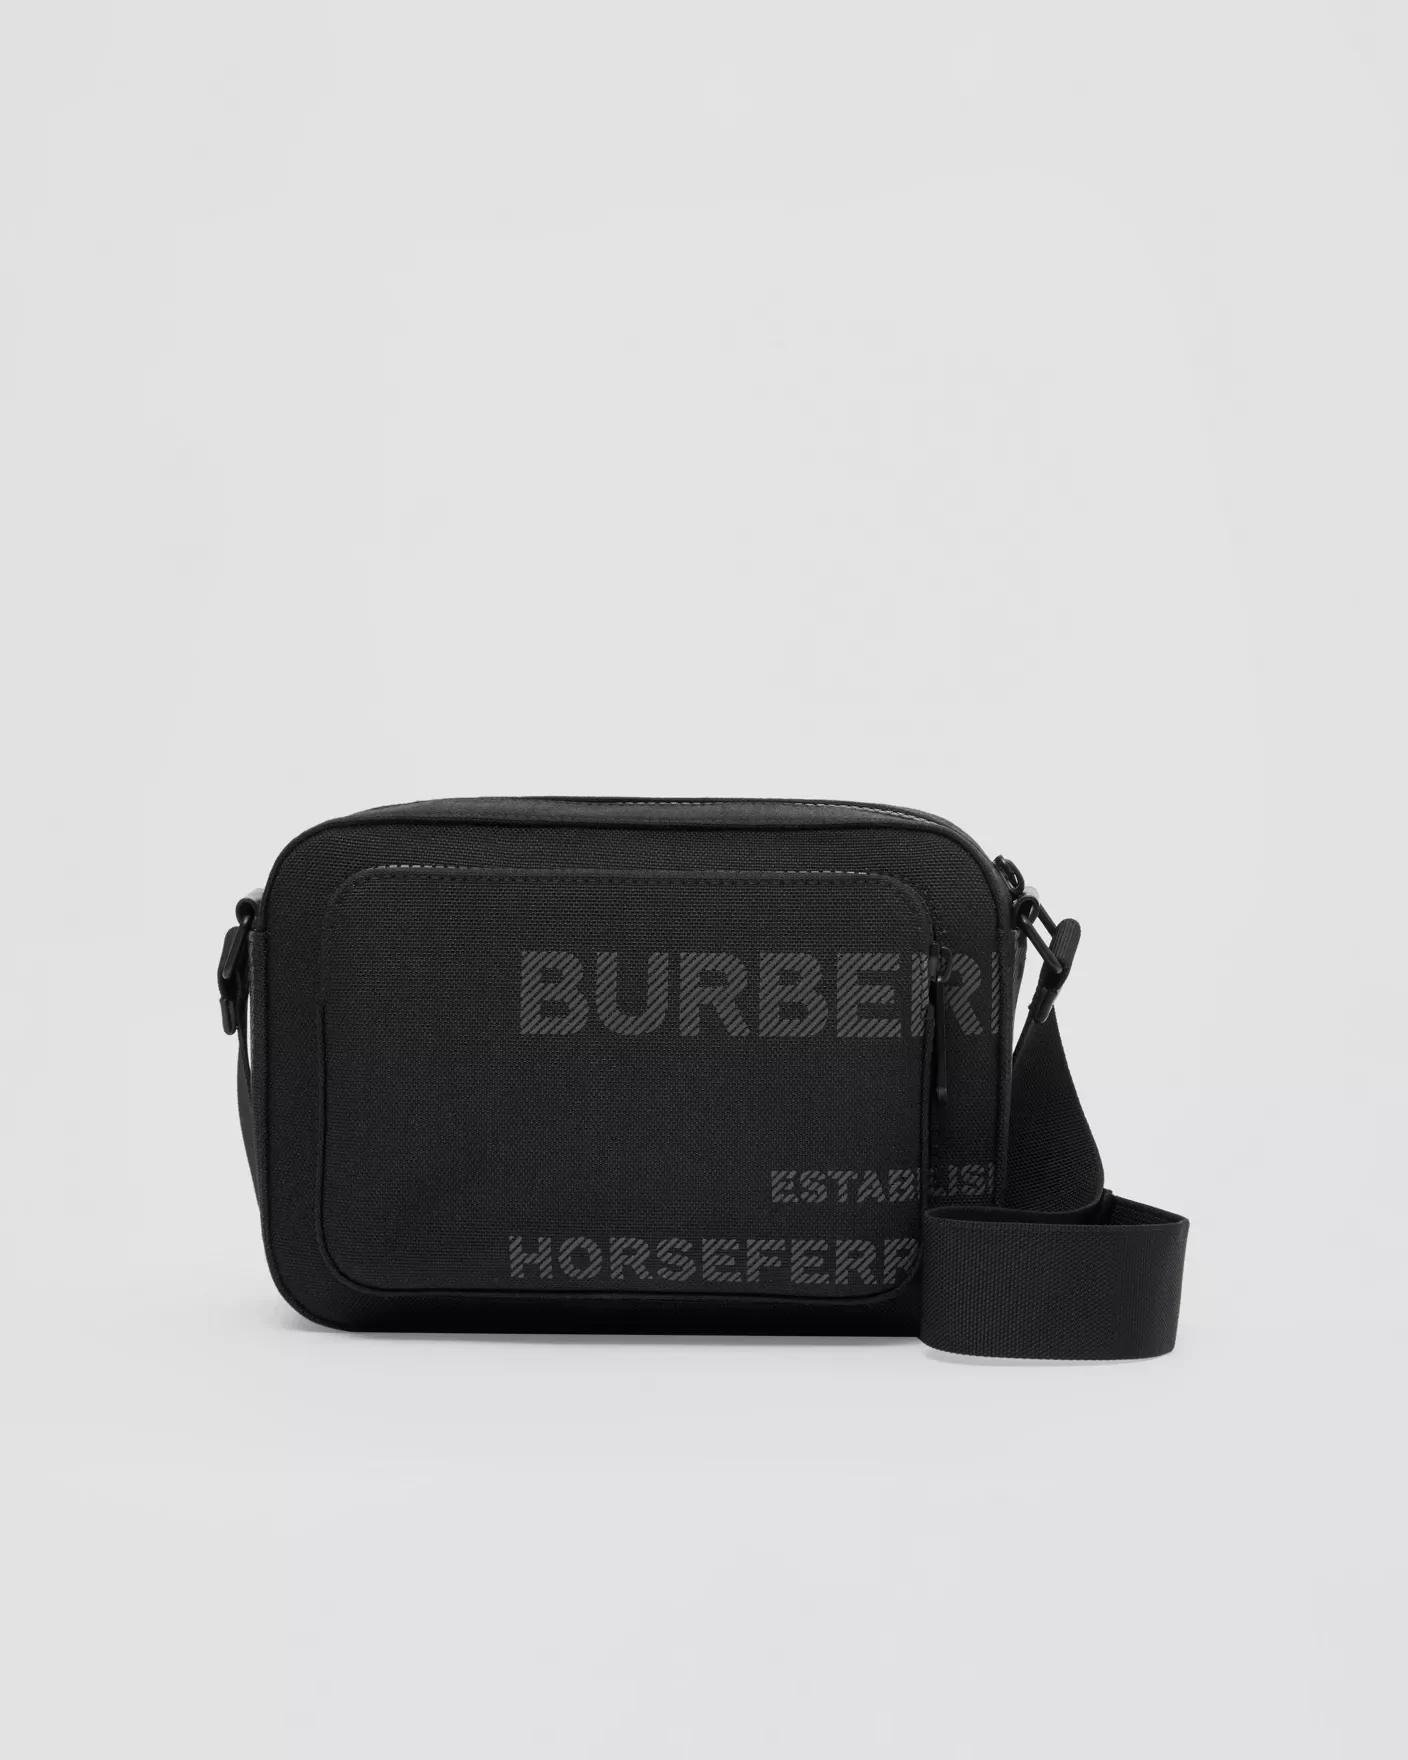 Burberry Black Horseferry Print Nylon Crossbody Bag